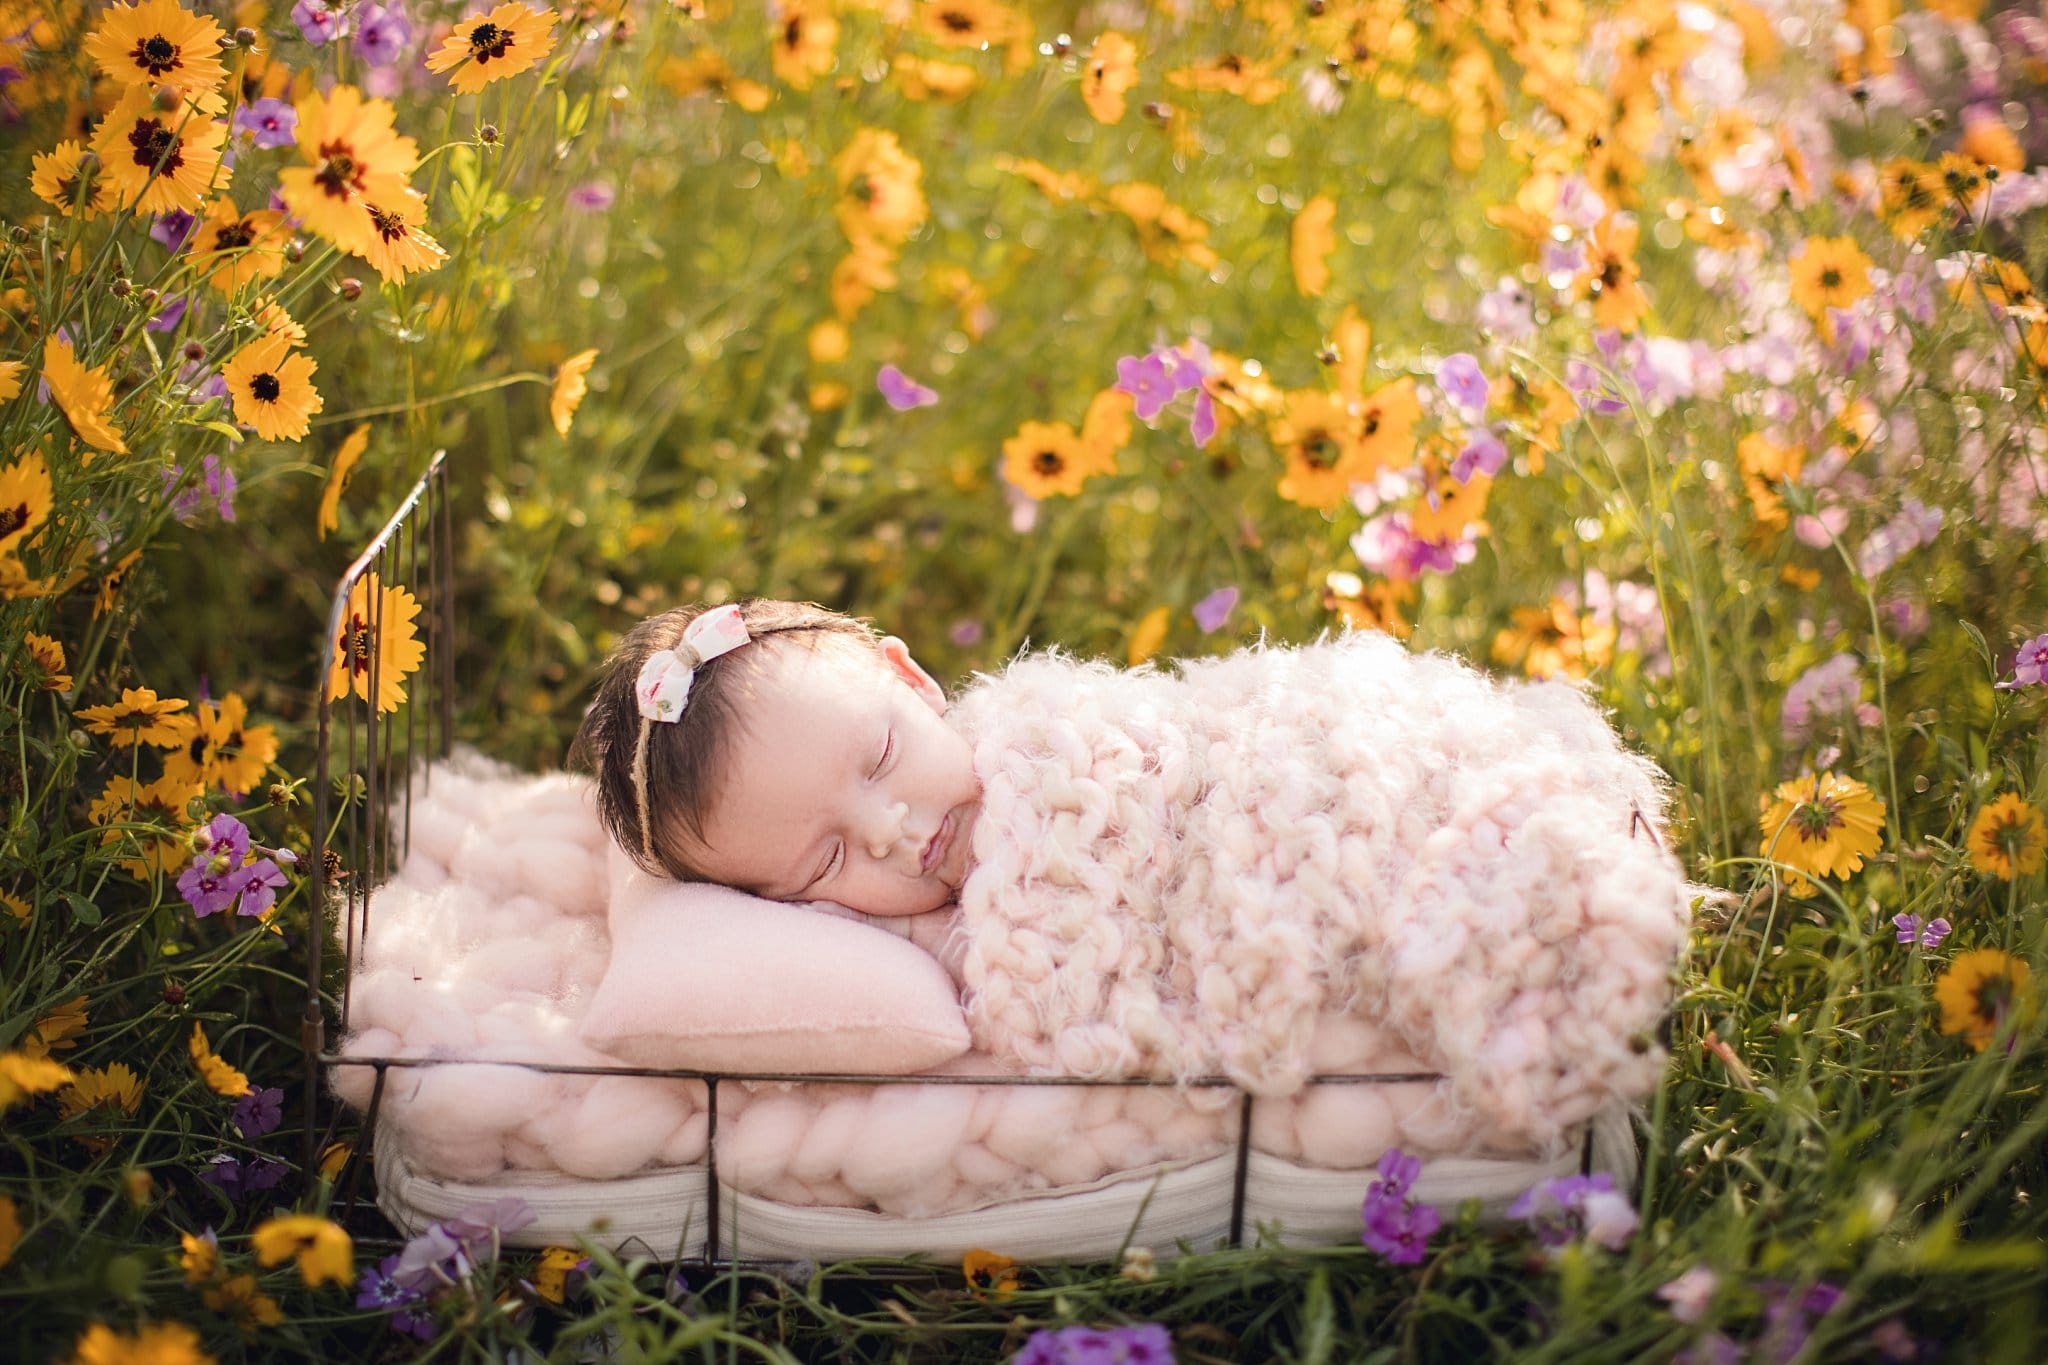 Outdoor Newborn Photographer Jacksonville Fl baby sleeping field of yellow and purple flowers soft fuzzy blush blanket